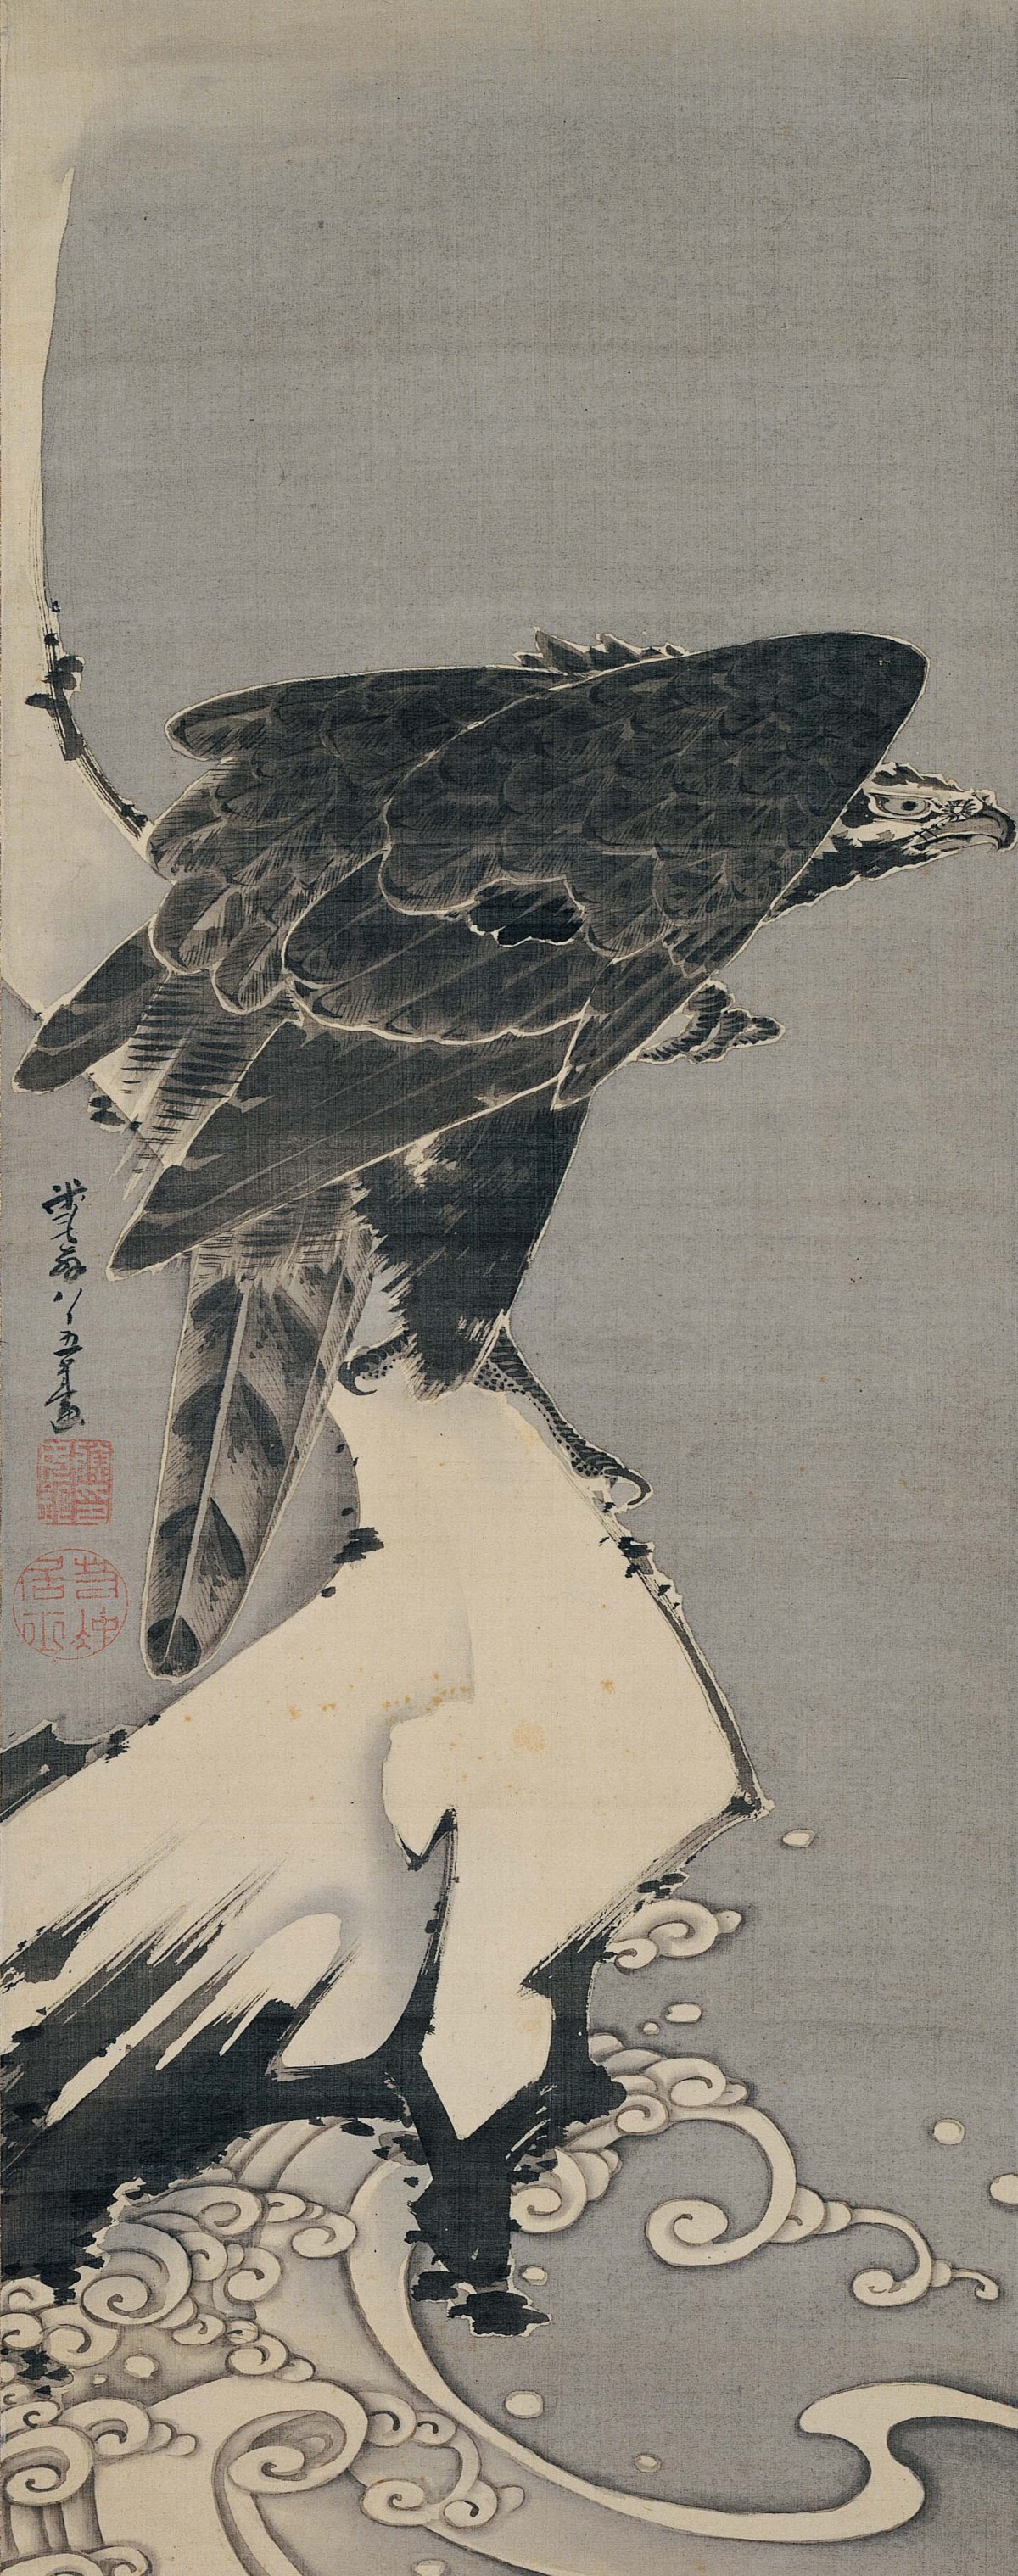 Image: Itō Jakuchū (Japan, 1716–1800), Eagle, 1800